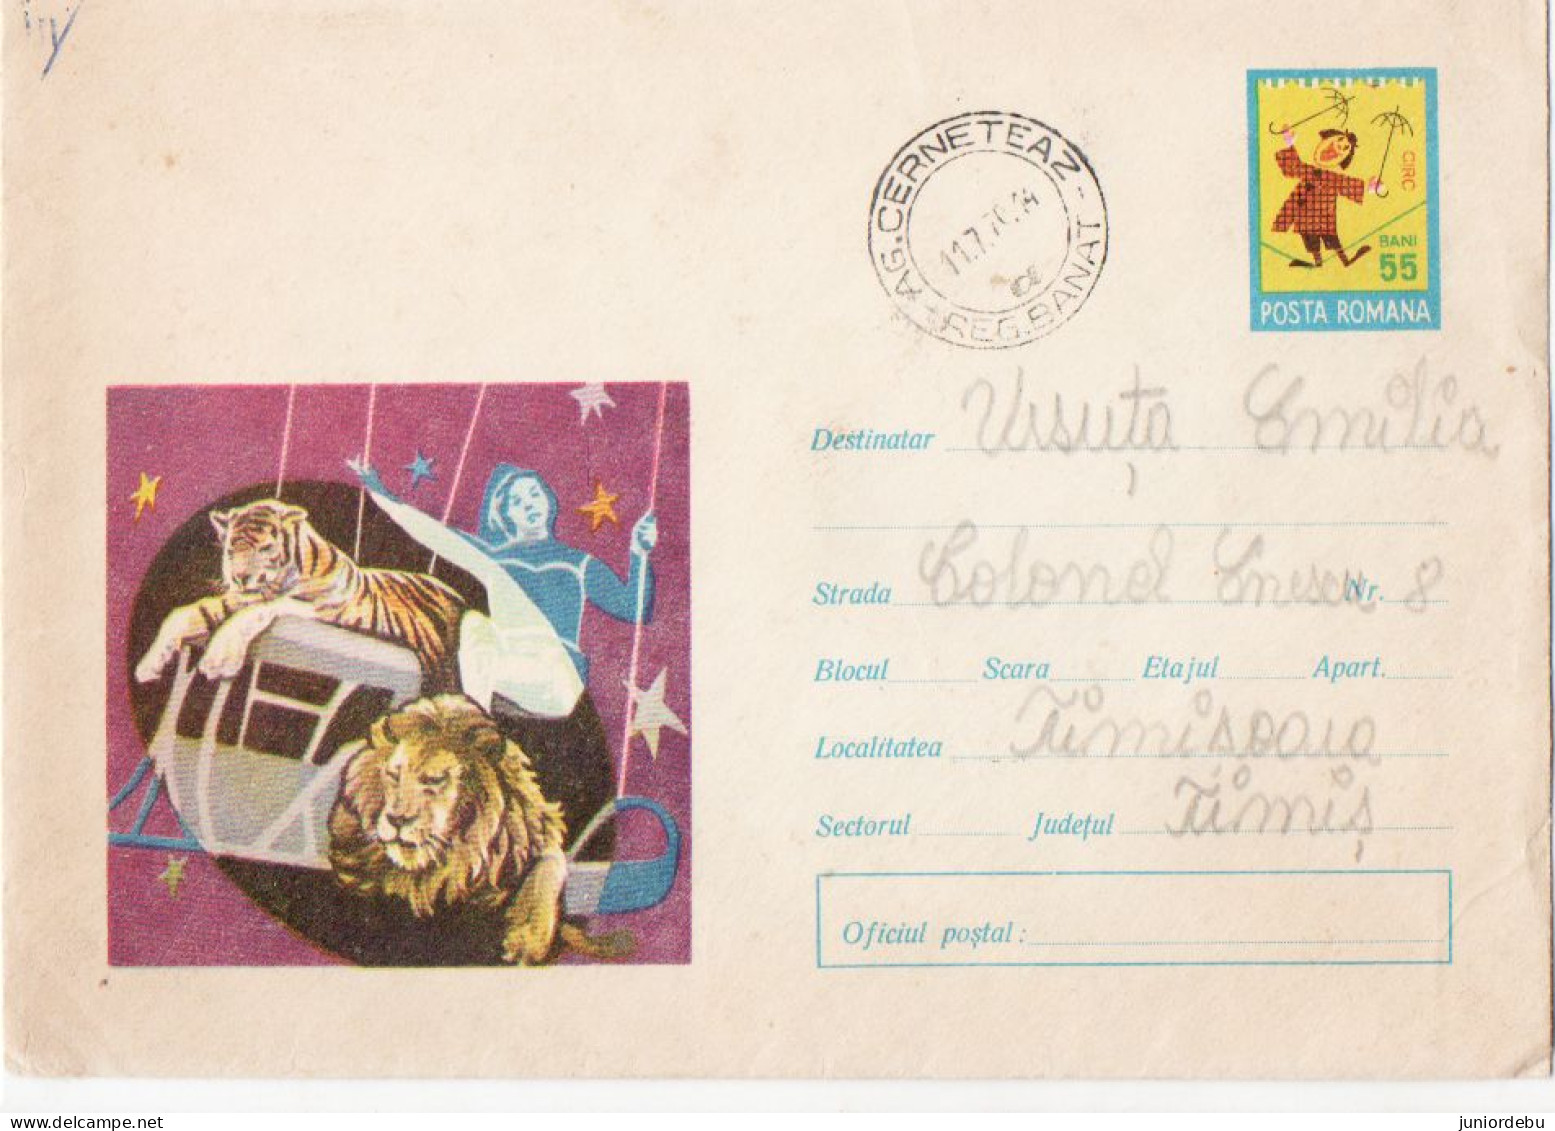 Romania - 1969  - Postal Stationery Cover  - Clown - Used. - Storia Postale